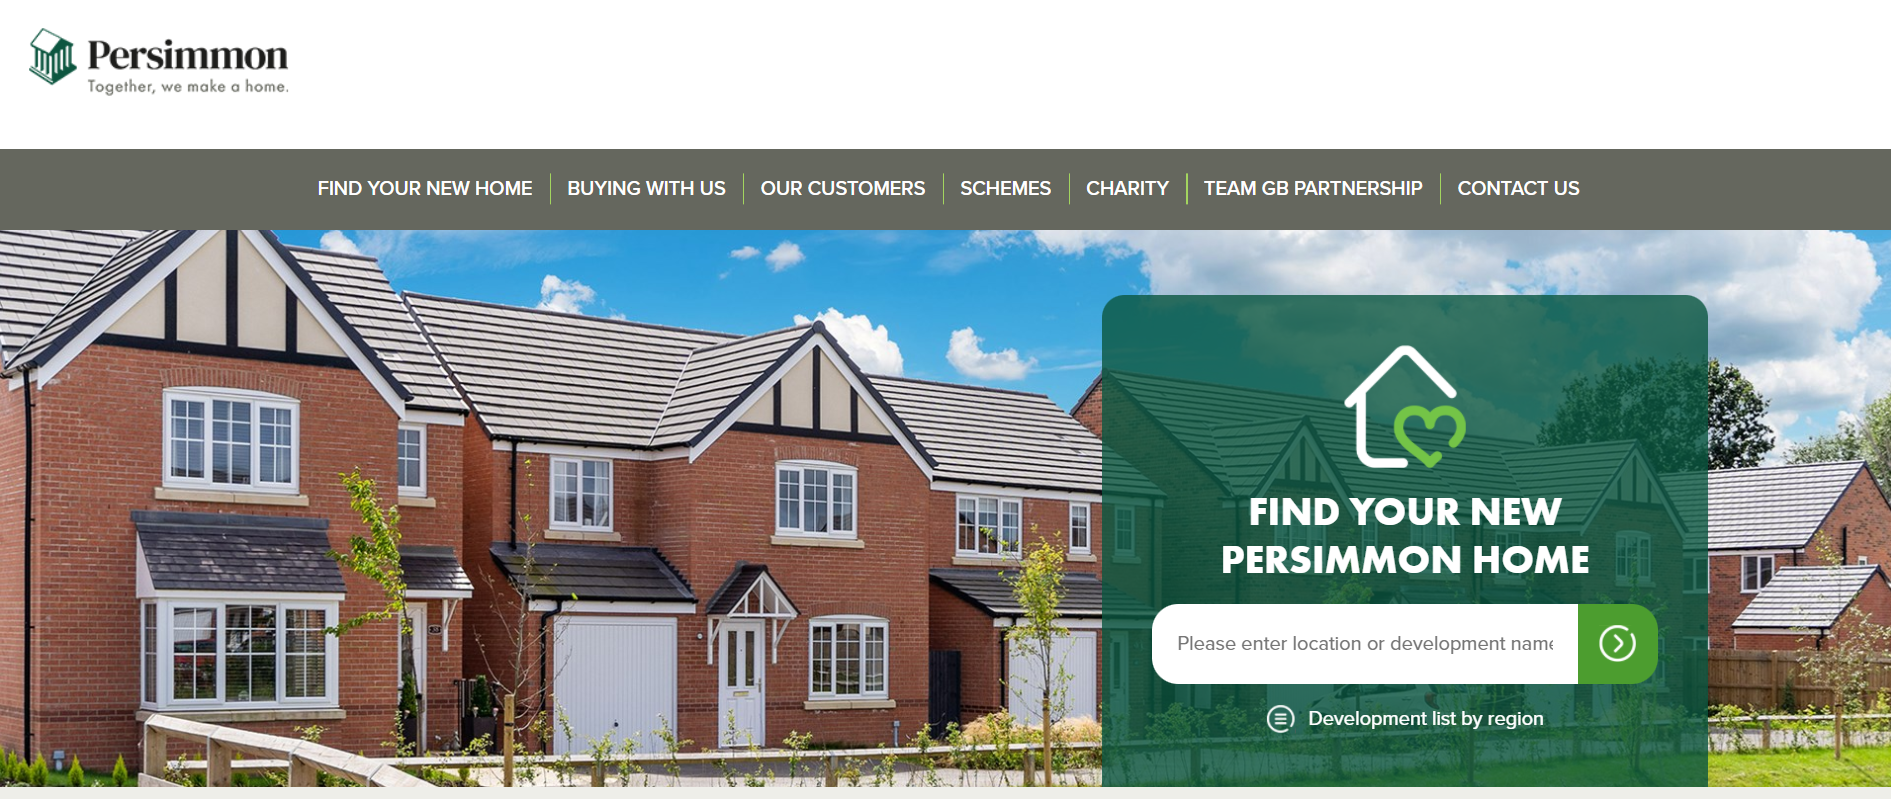 Persimmon Real Estate Company Homepage